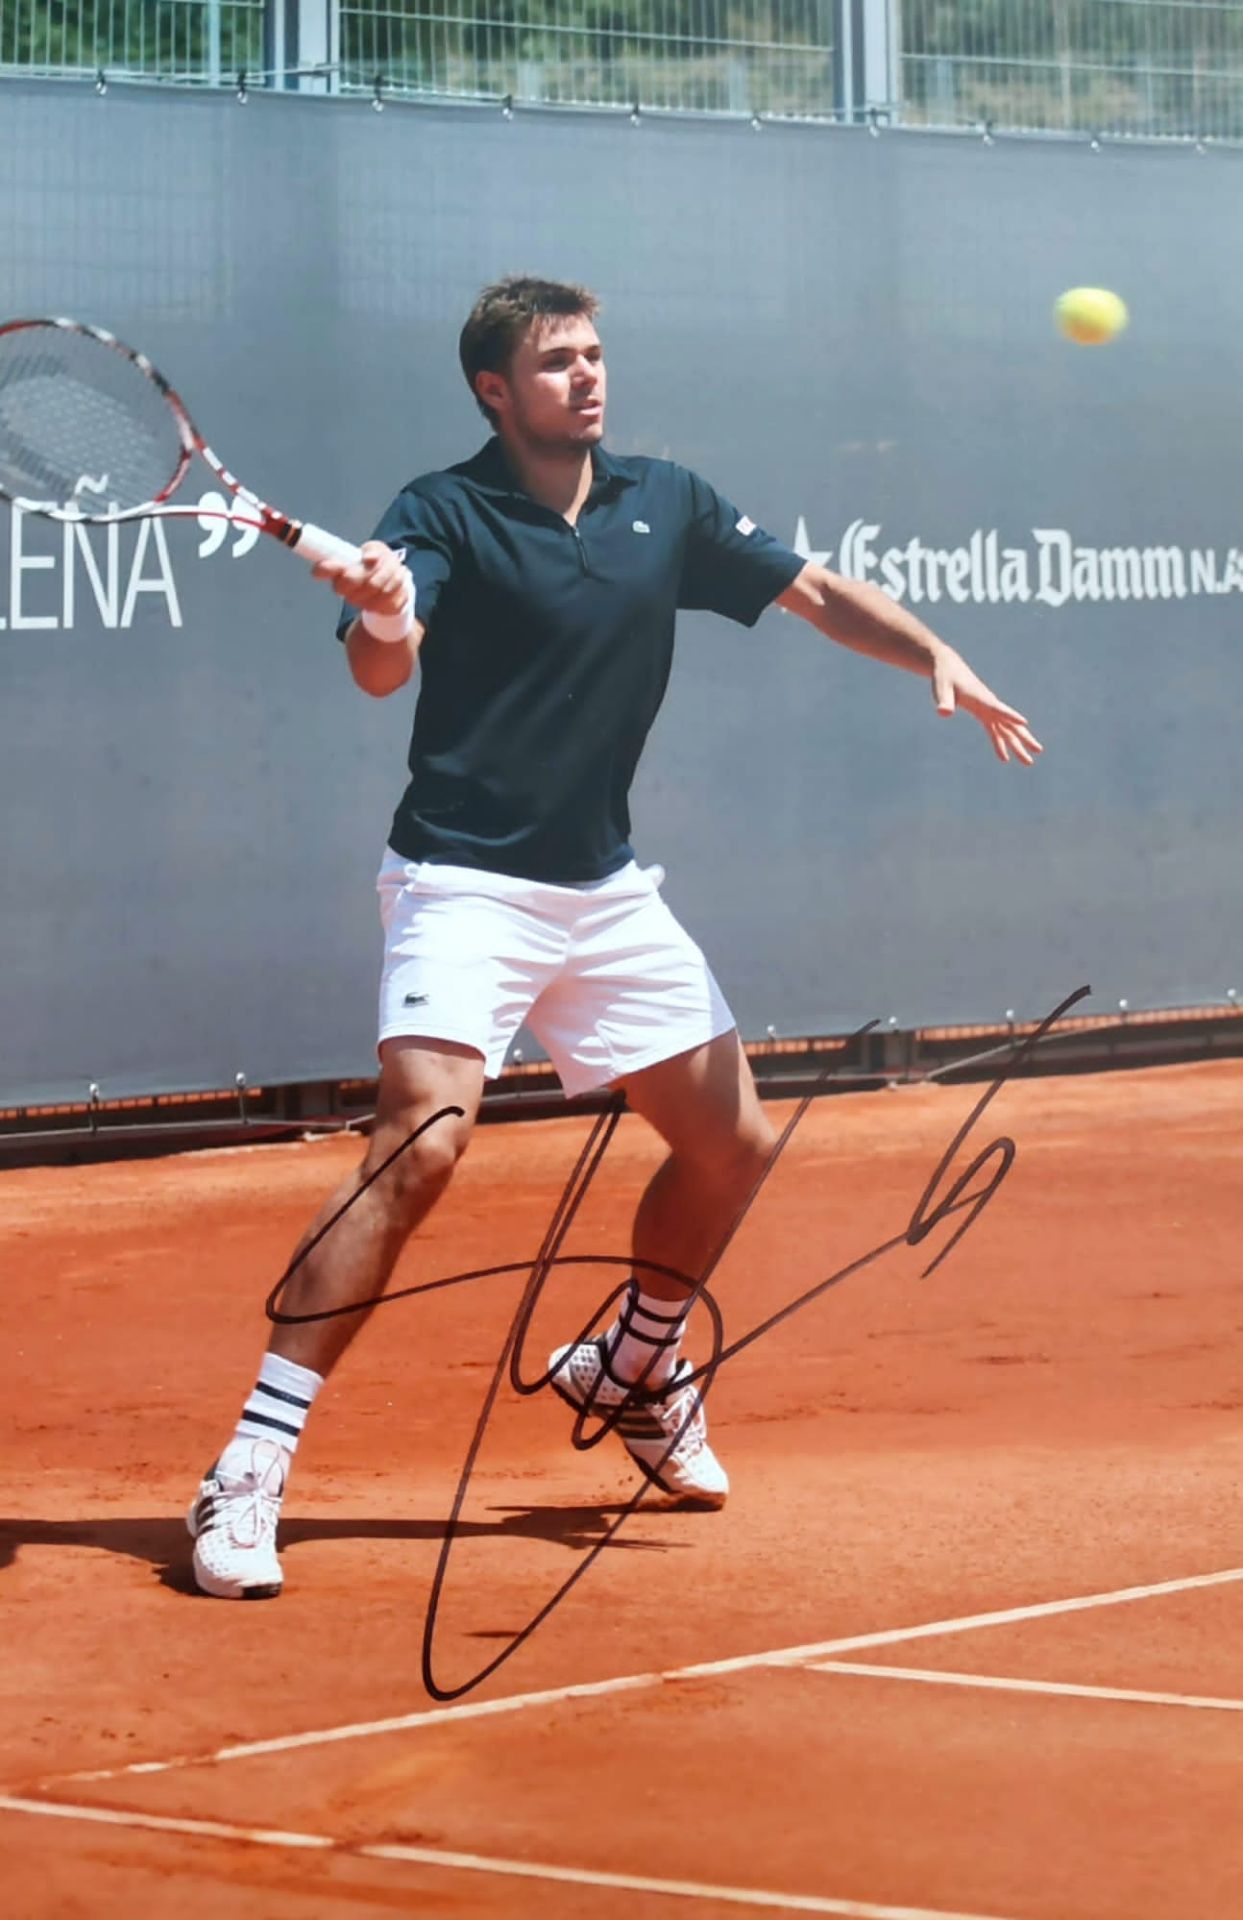 Stanislas Stan Wawrinka Signed Autograph 12x8 Photograph Photo Tennis AFTAL Approved